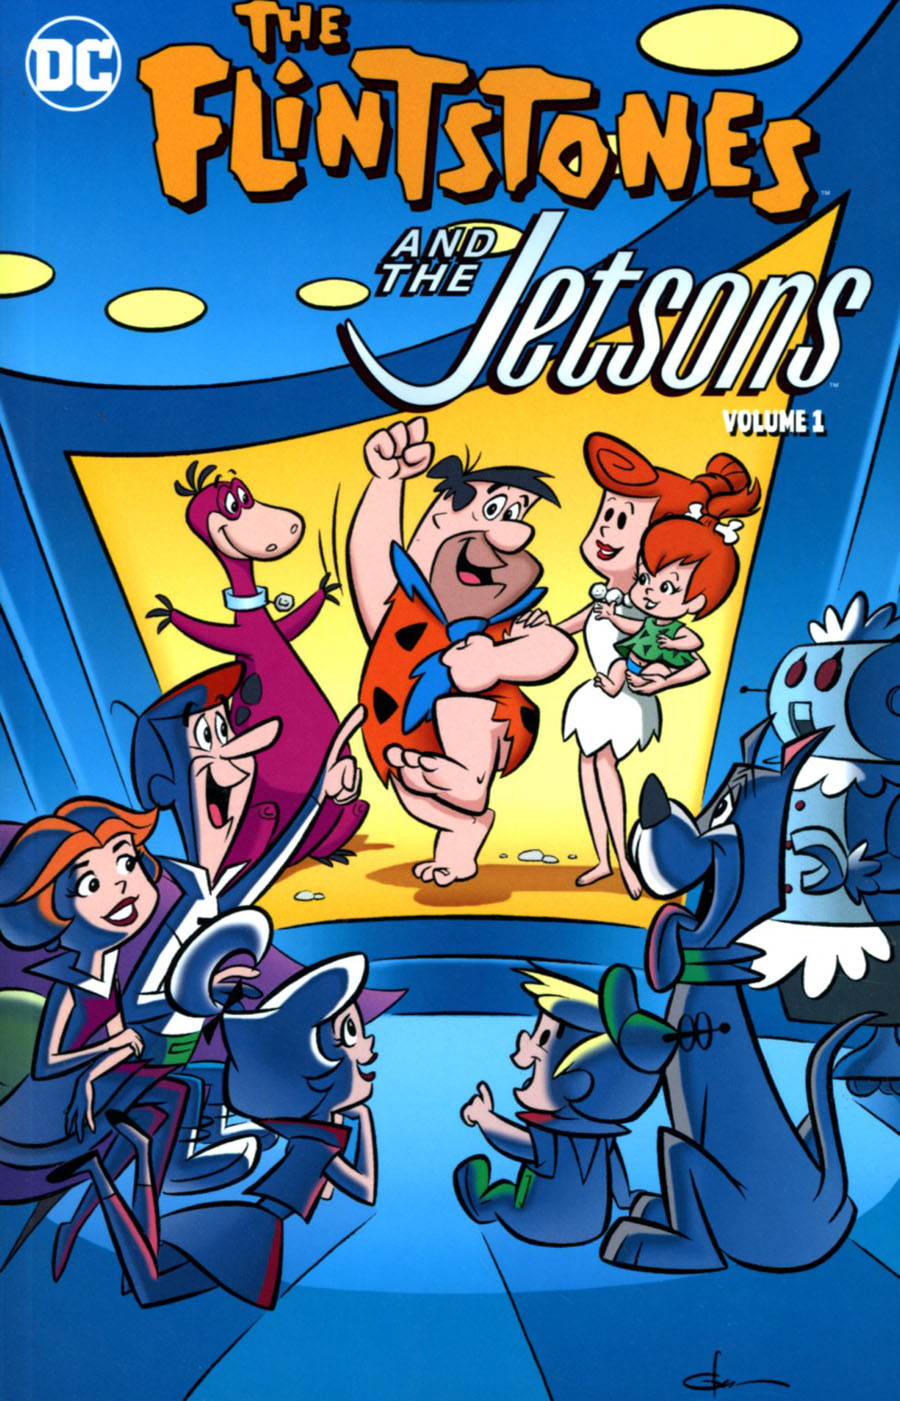 Flintstones And The Jetsons Vol 1 TP